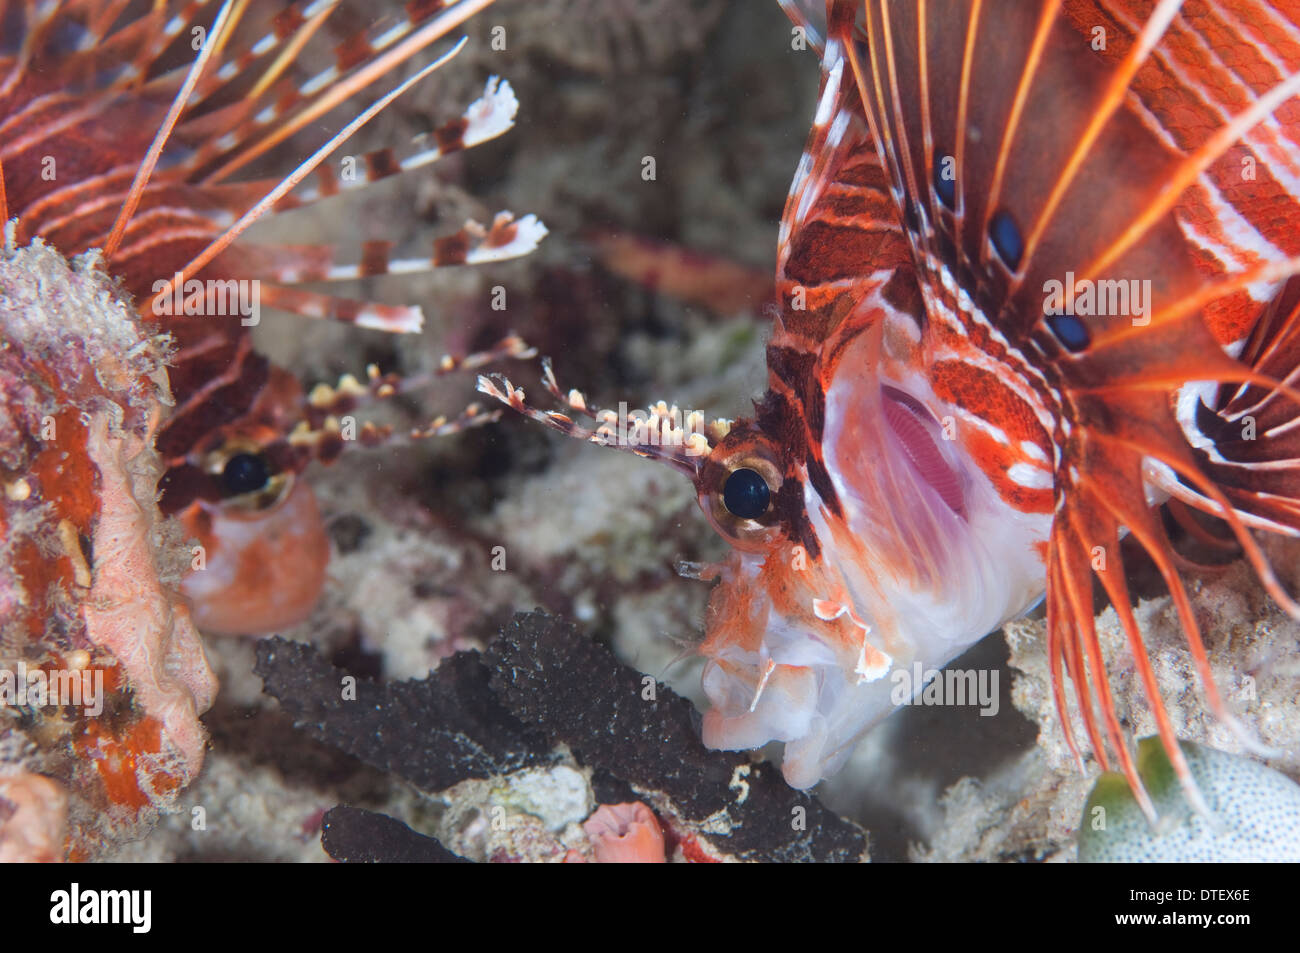 Pair of Zebra Lionfish, Dendrochirus zebra, feeding, The Maldives Stock Photo